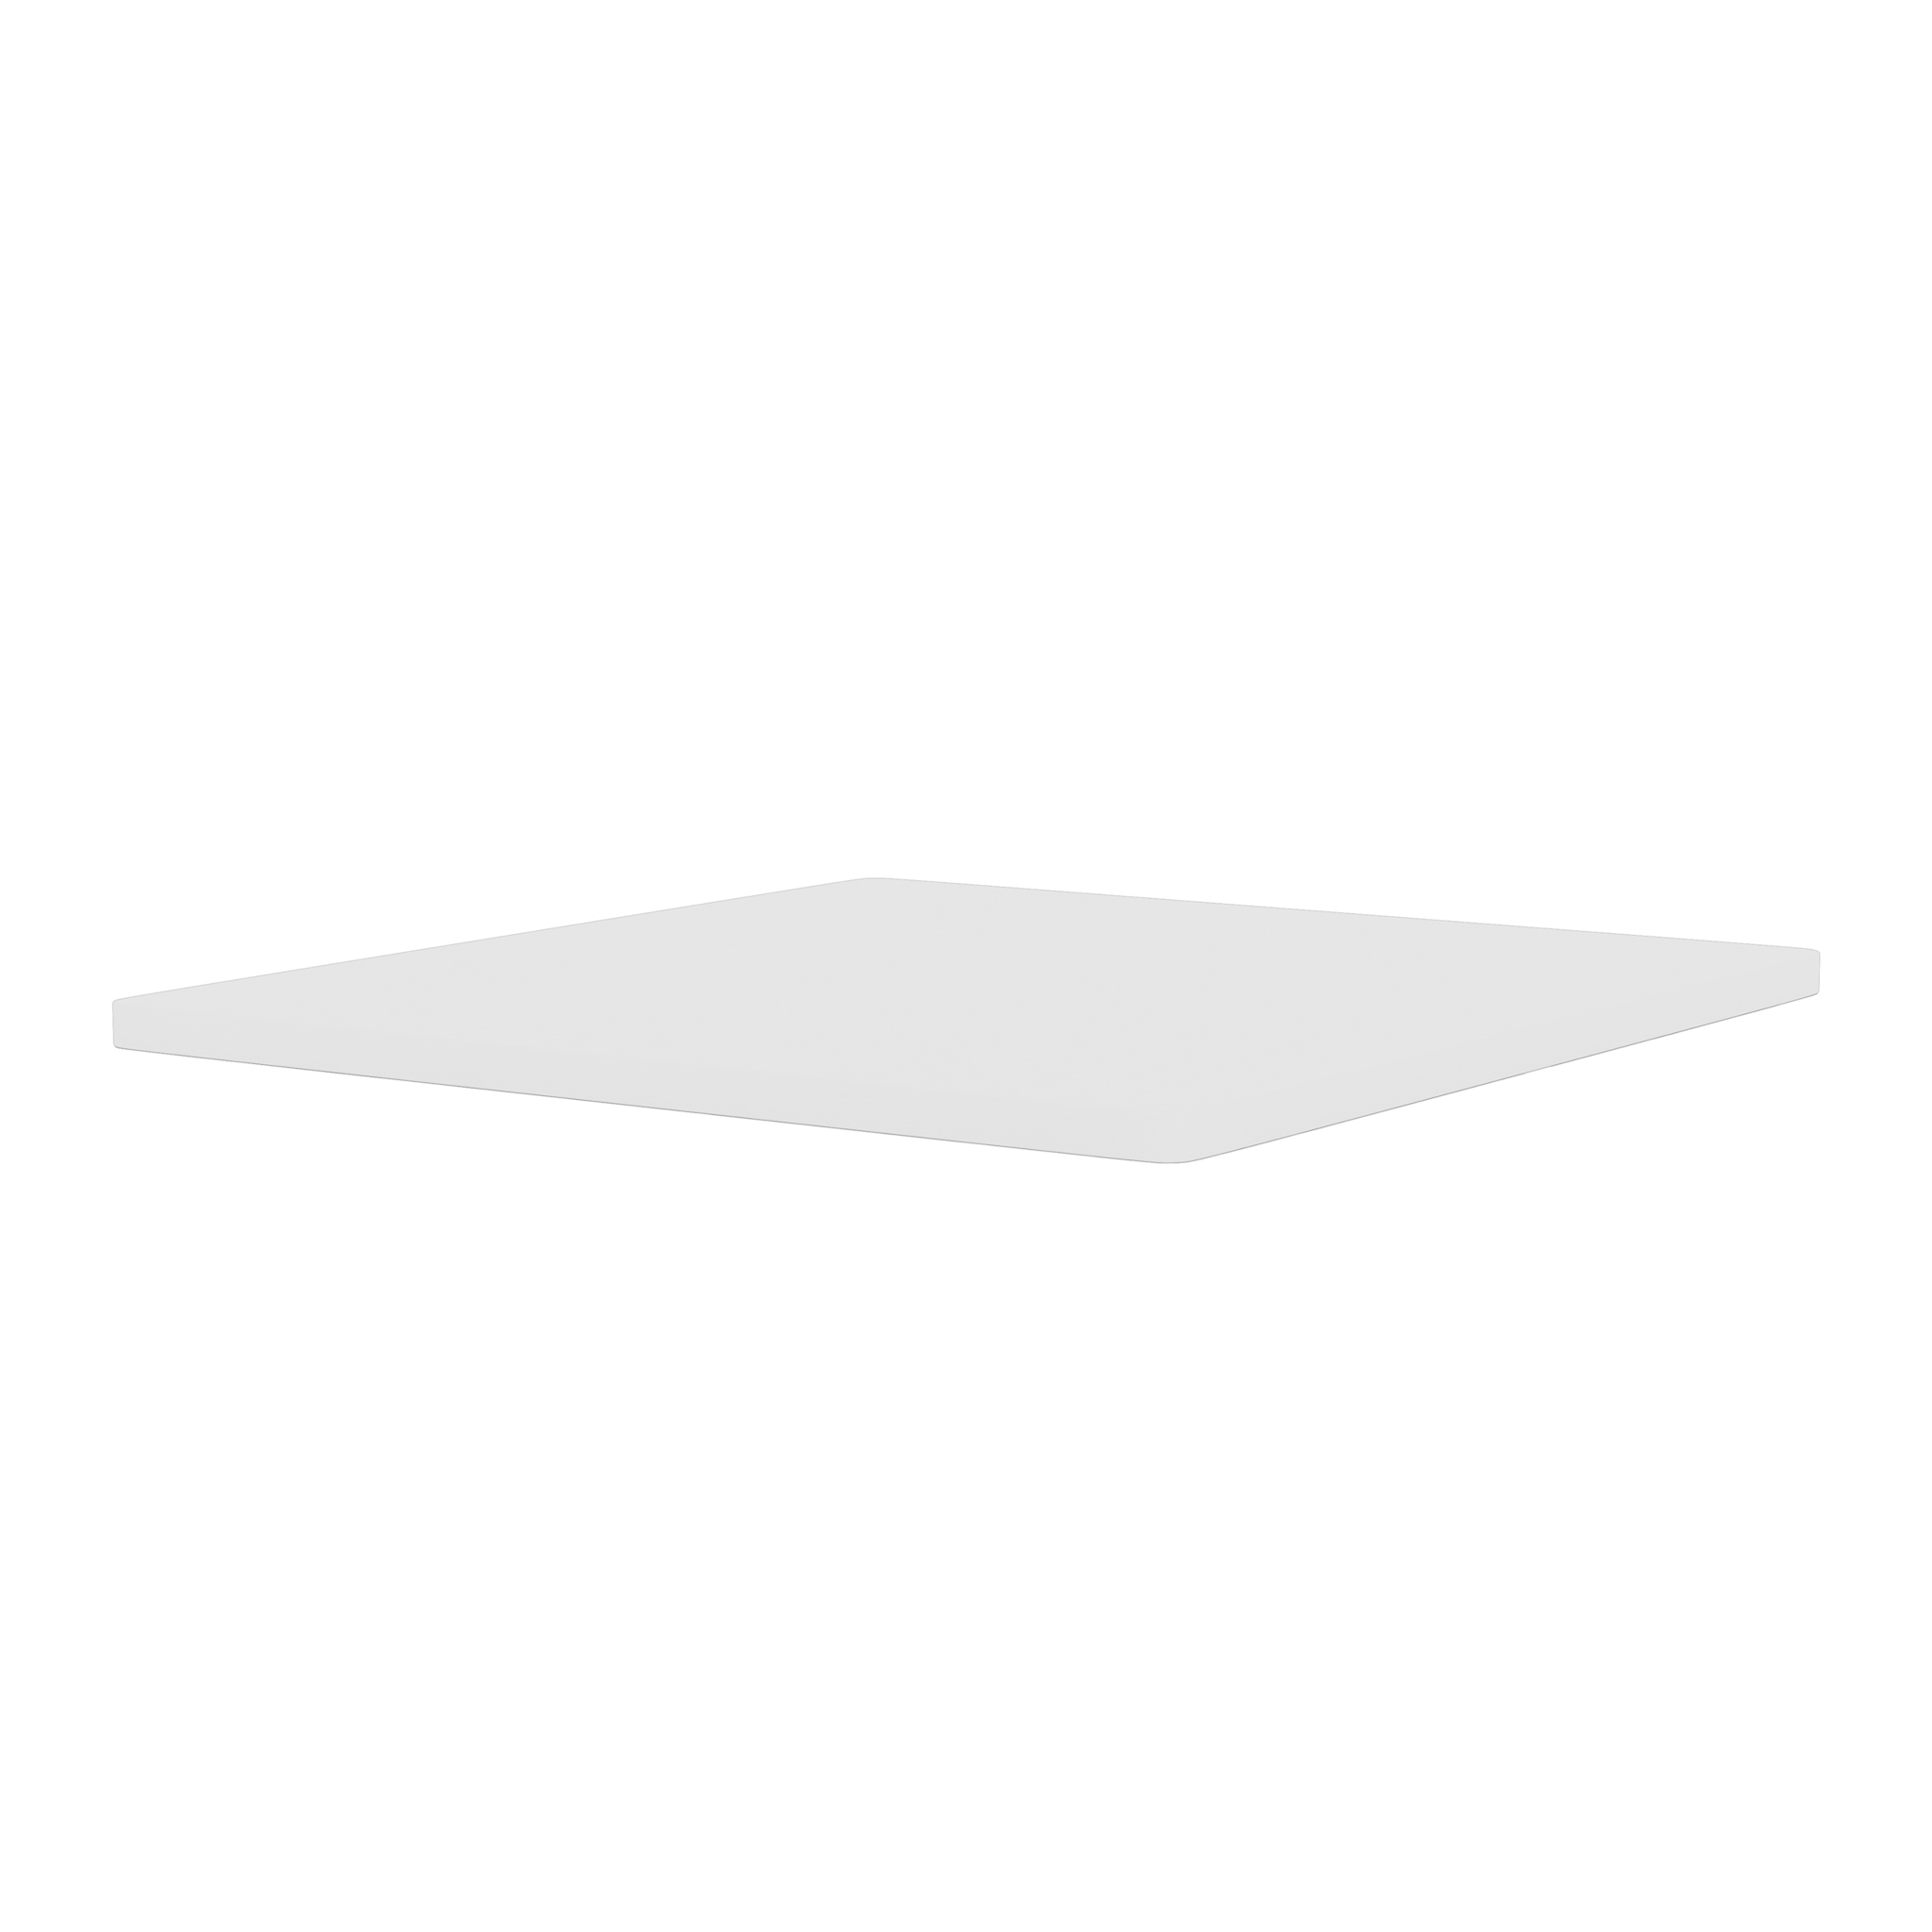 MONTANA // PANTON WIRE SINGLE EINLEGEBODEN - TIEFE 35cm | 101 NEW WHITE